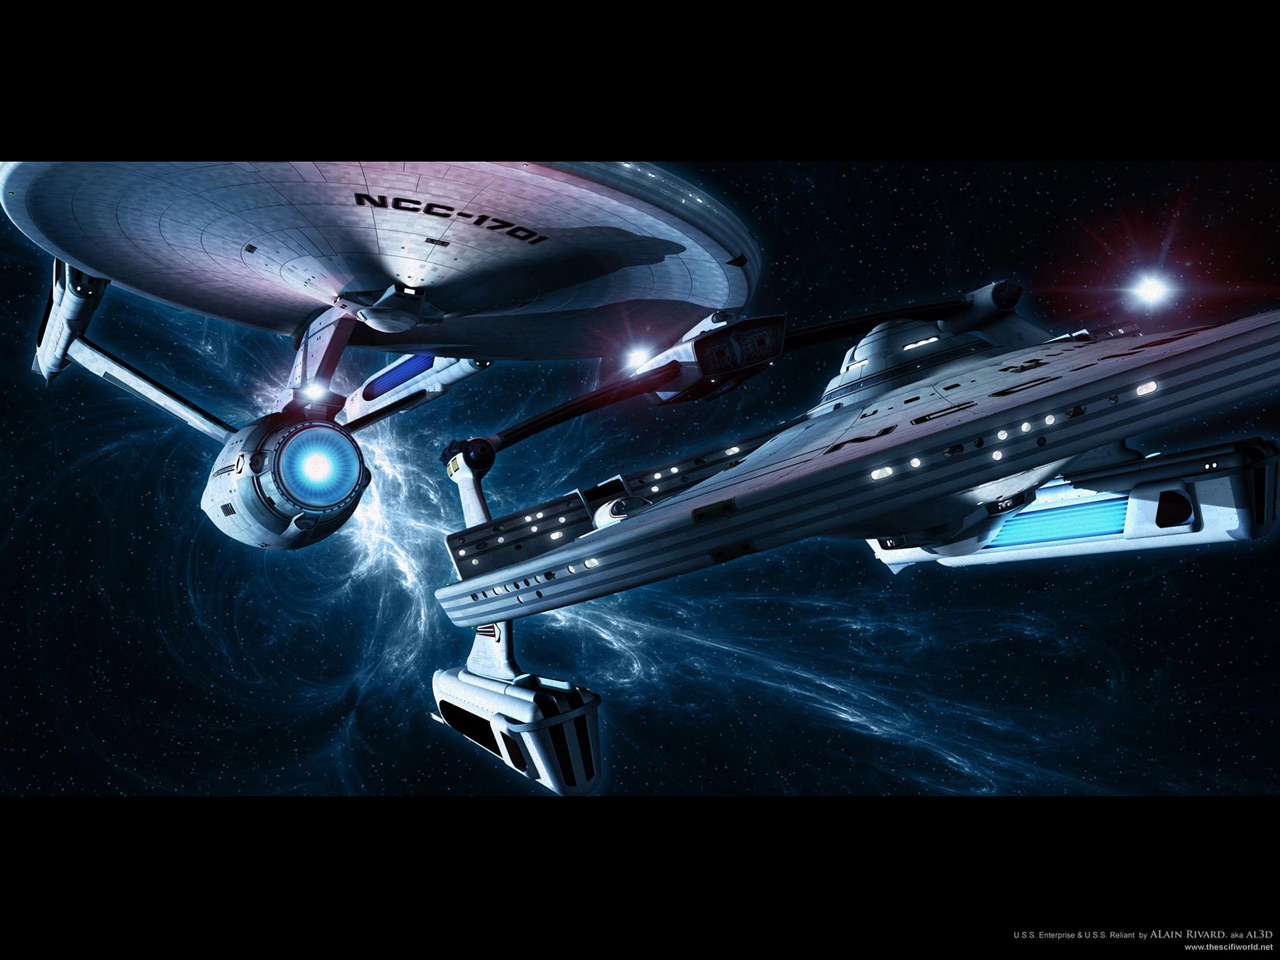 Star Trek Starships Uss Enterprise And Reliant On Sector Patrol